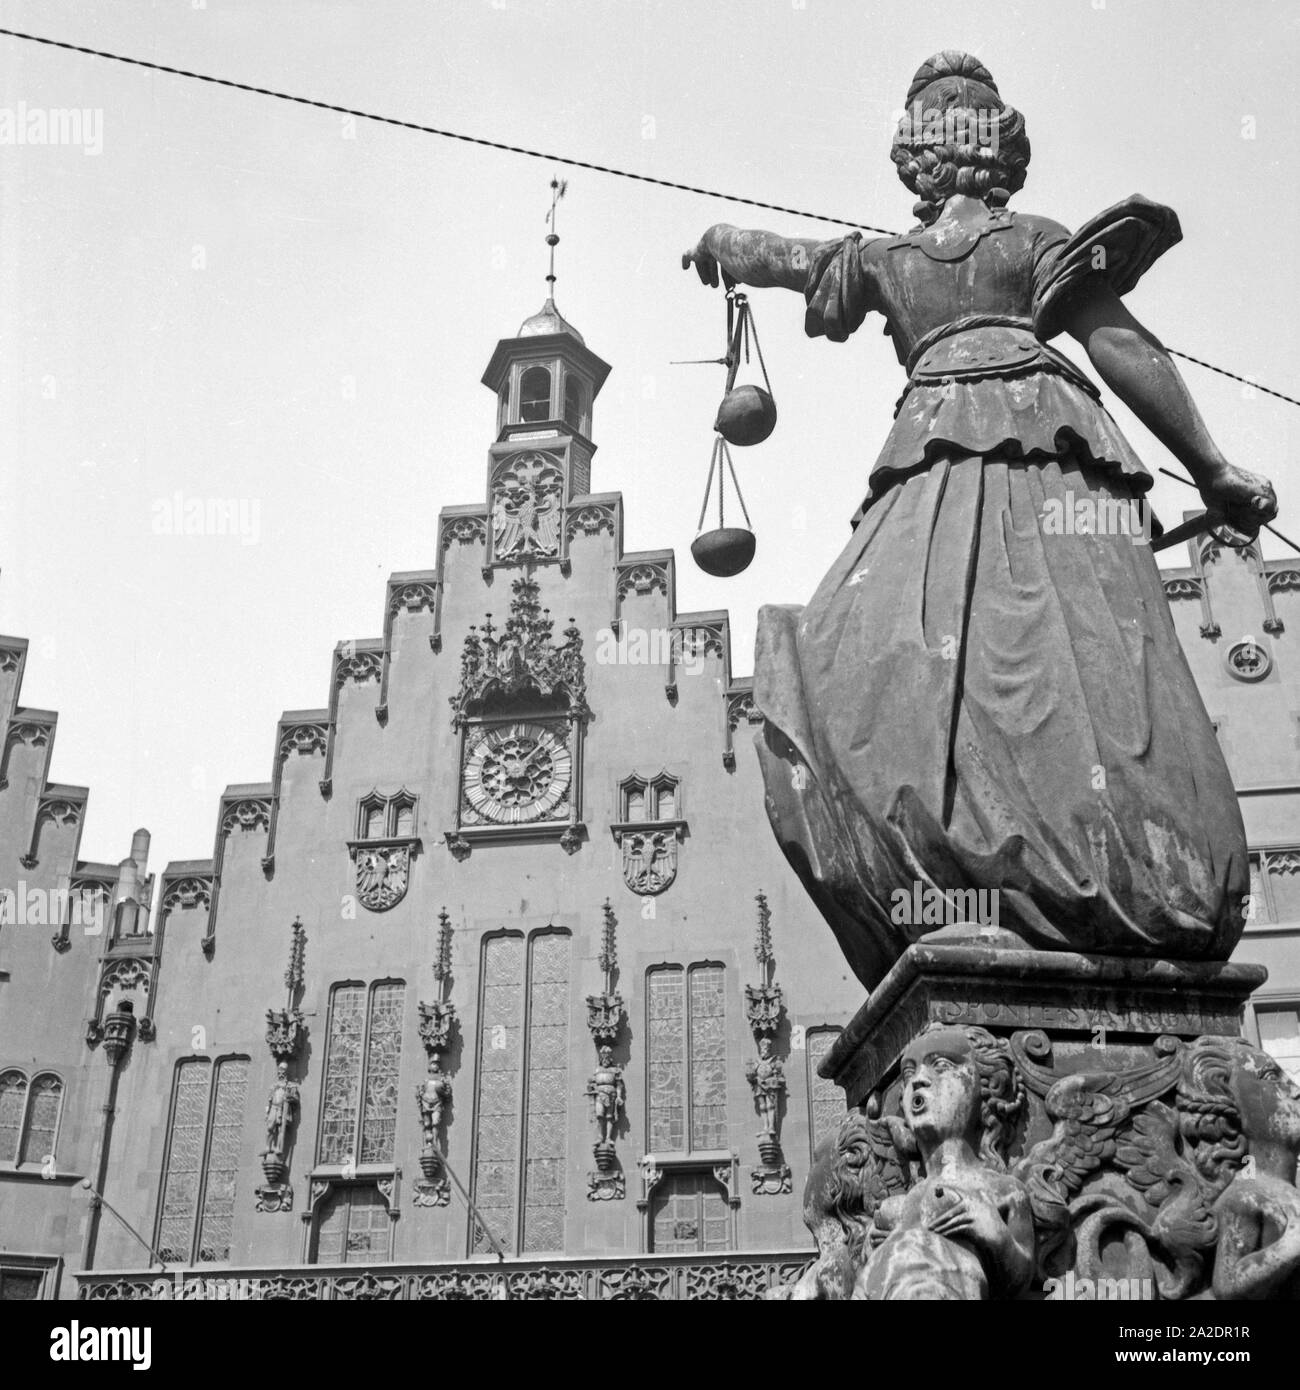 Häuserzeile am Römerberg mit Justitia Skulptur in der Altstadt von Frankfurt am Main, Deutschland 1930er Jahre. Fila di case a Roemerberg nella città vecchia di Francoforte in Germania 1930s. Foto Stock